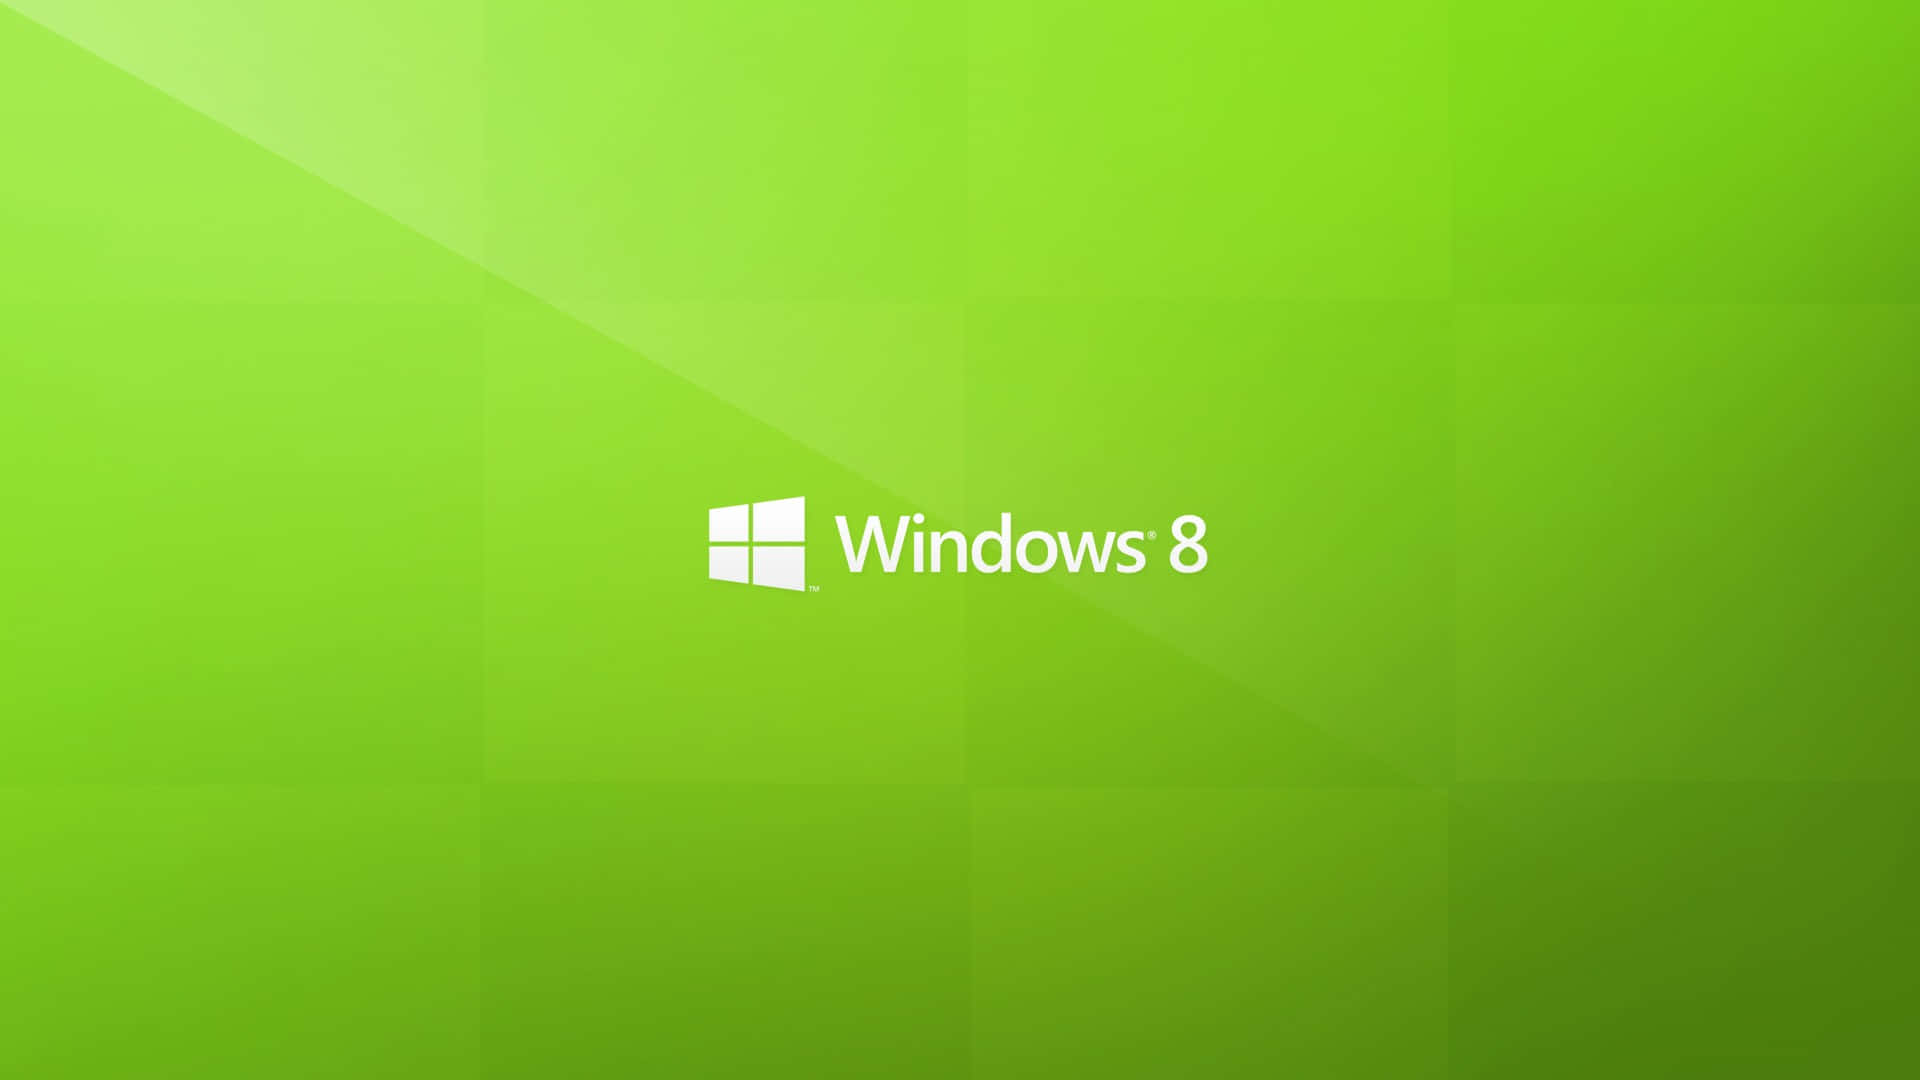 Vibrant Windows 8 Wallpaper with Logo